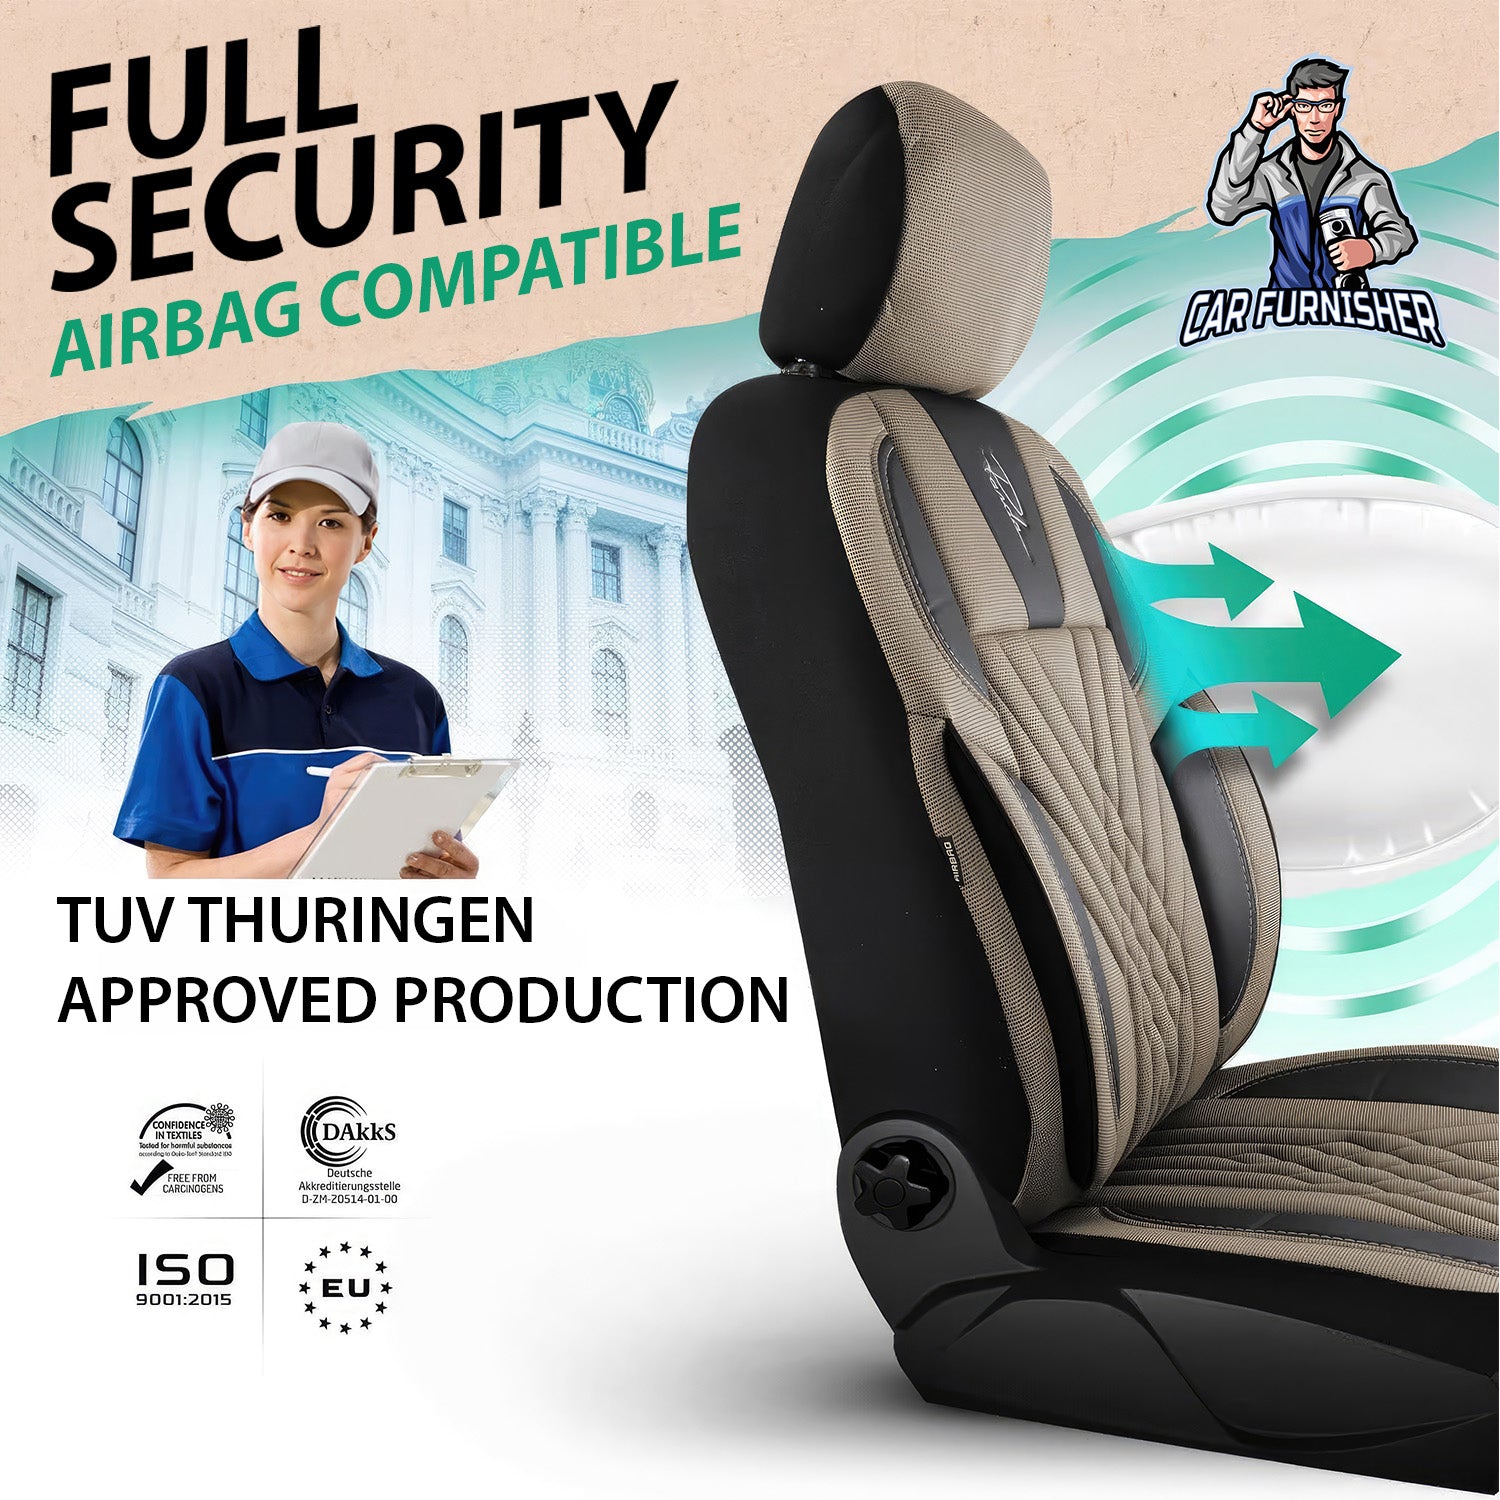 Car Seat Cover Set - Vienna Design Beige 5 Seats + Headrests (Full Set) Leather & Pique Fabric